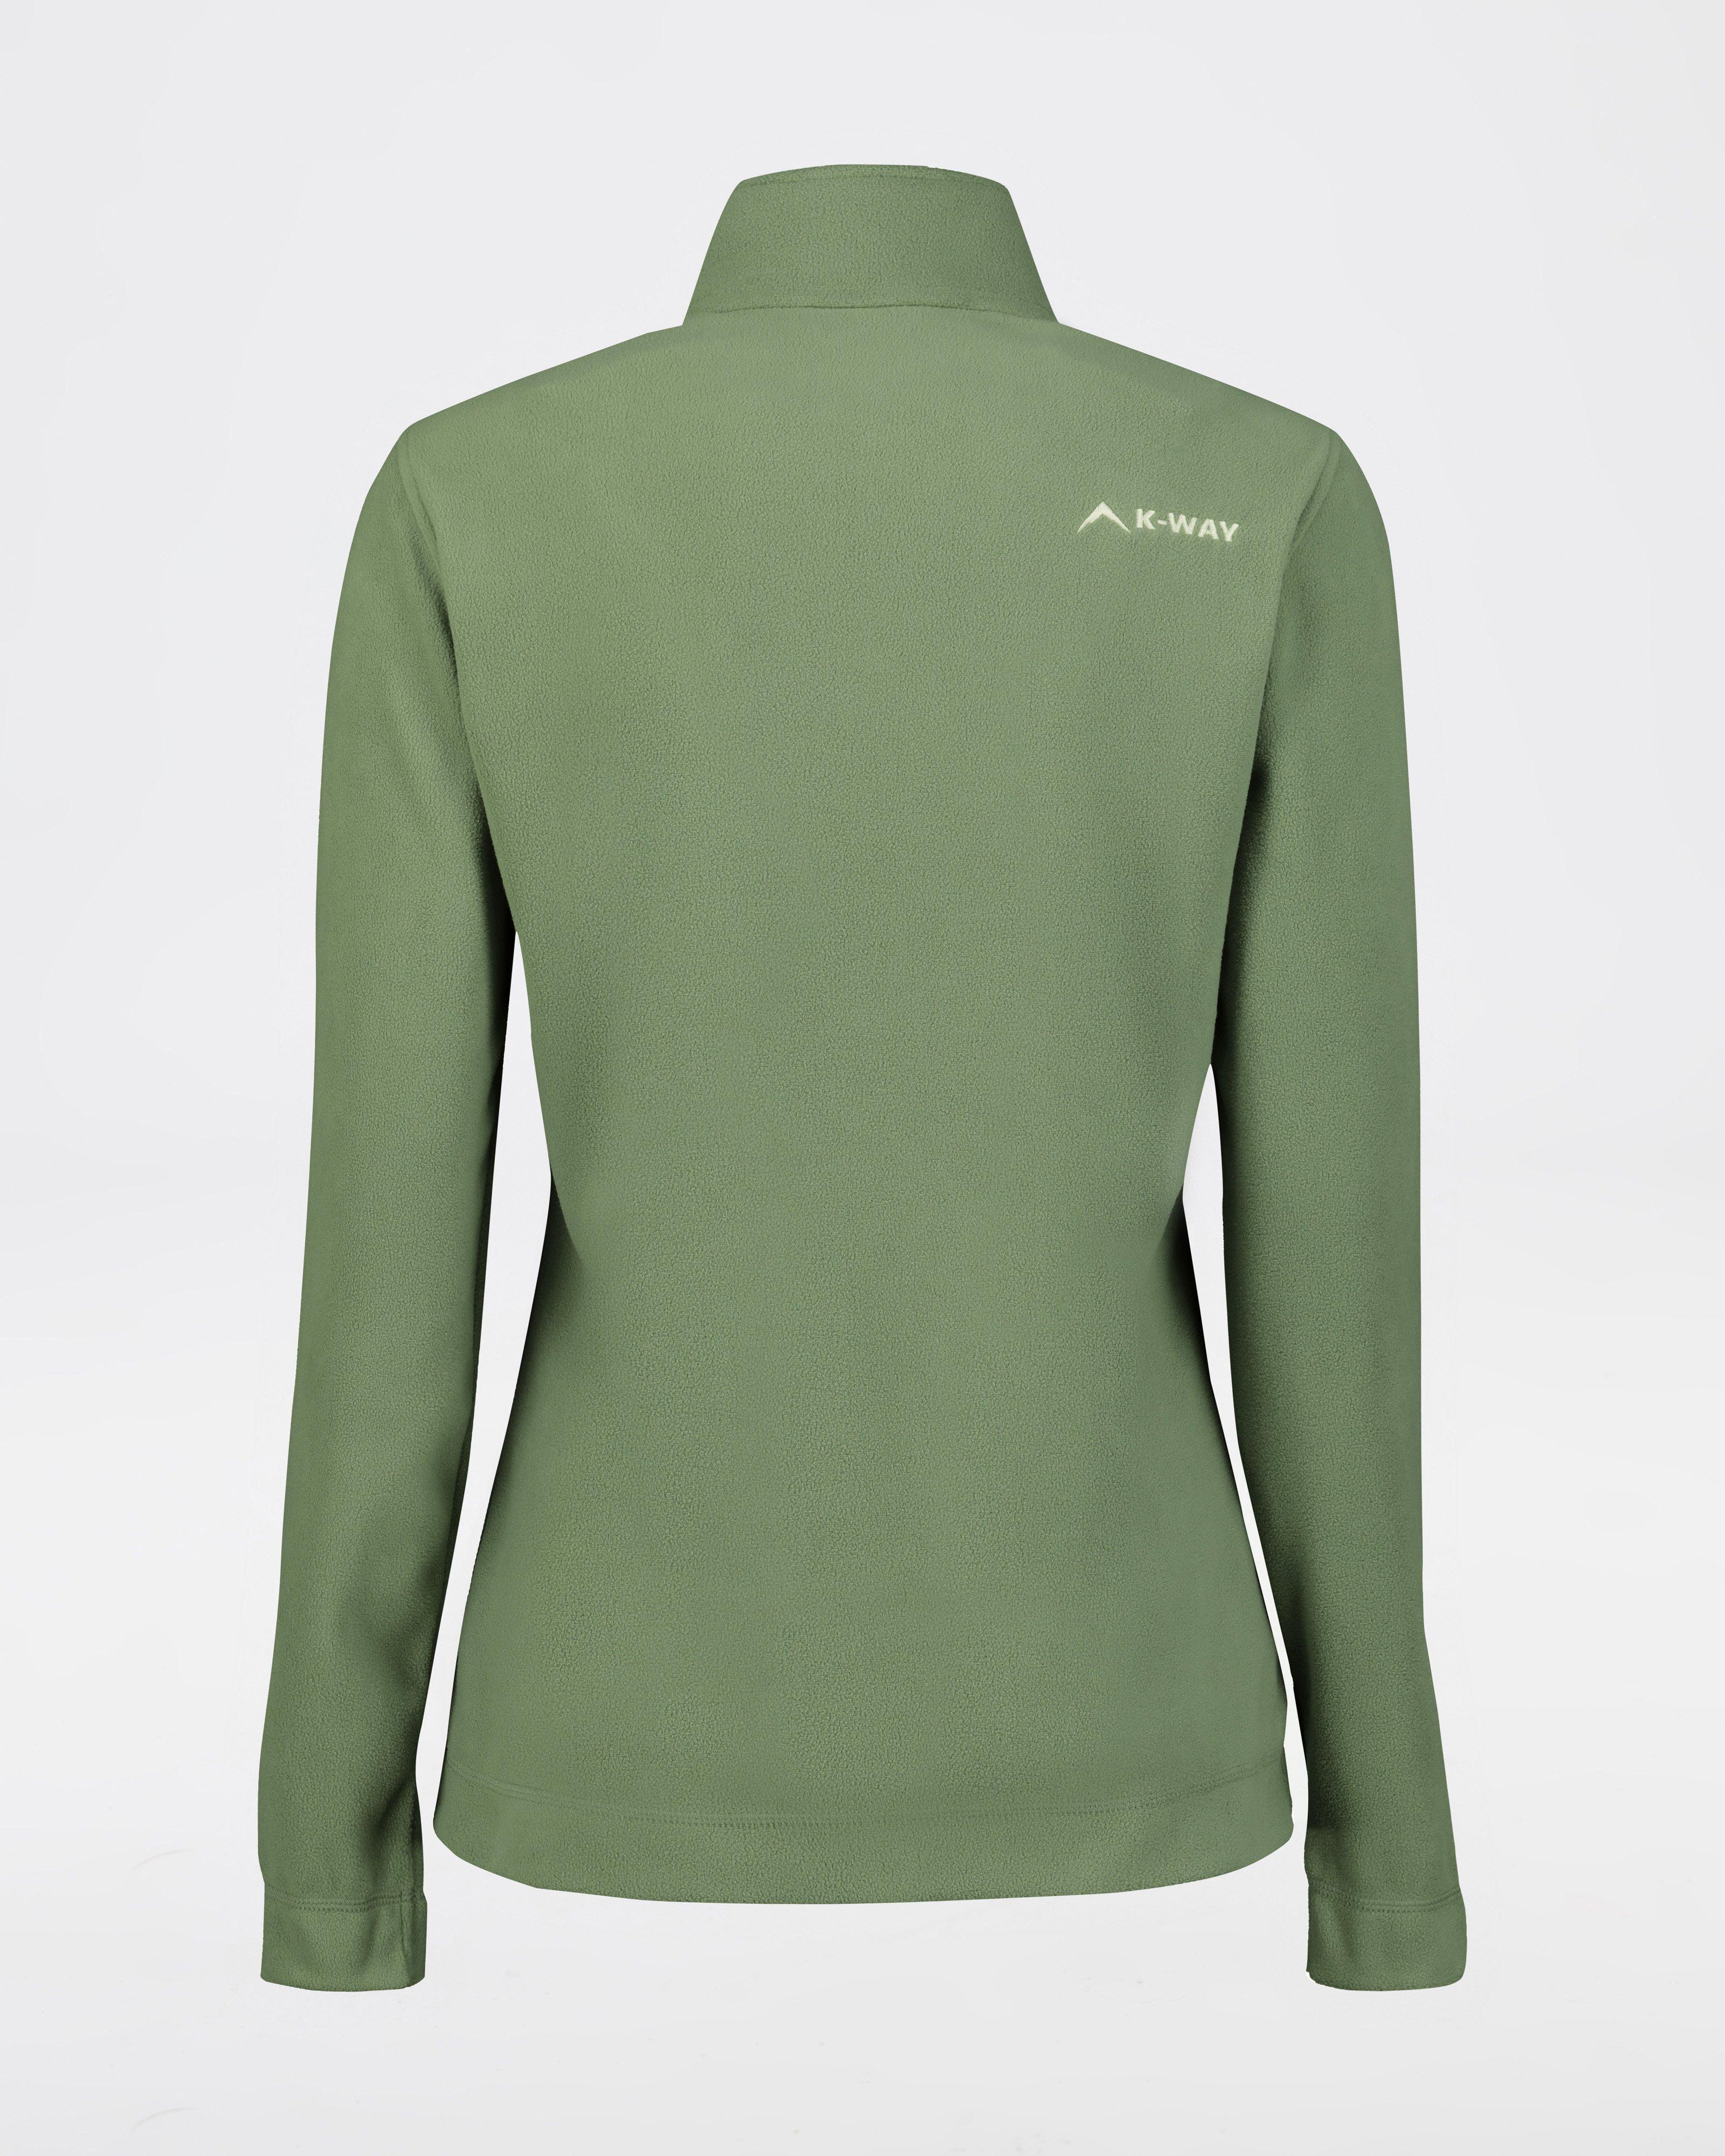 Lodgeway Countrywear - New Cedar Green 'Tilton' 1/4 zip fleece